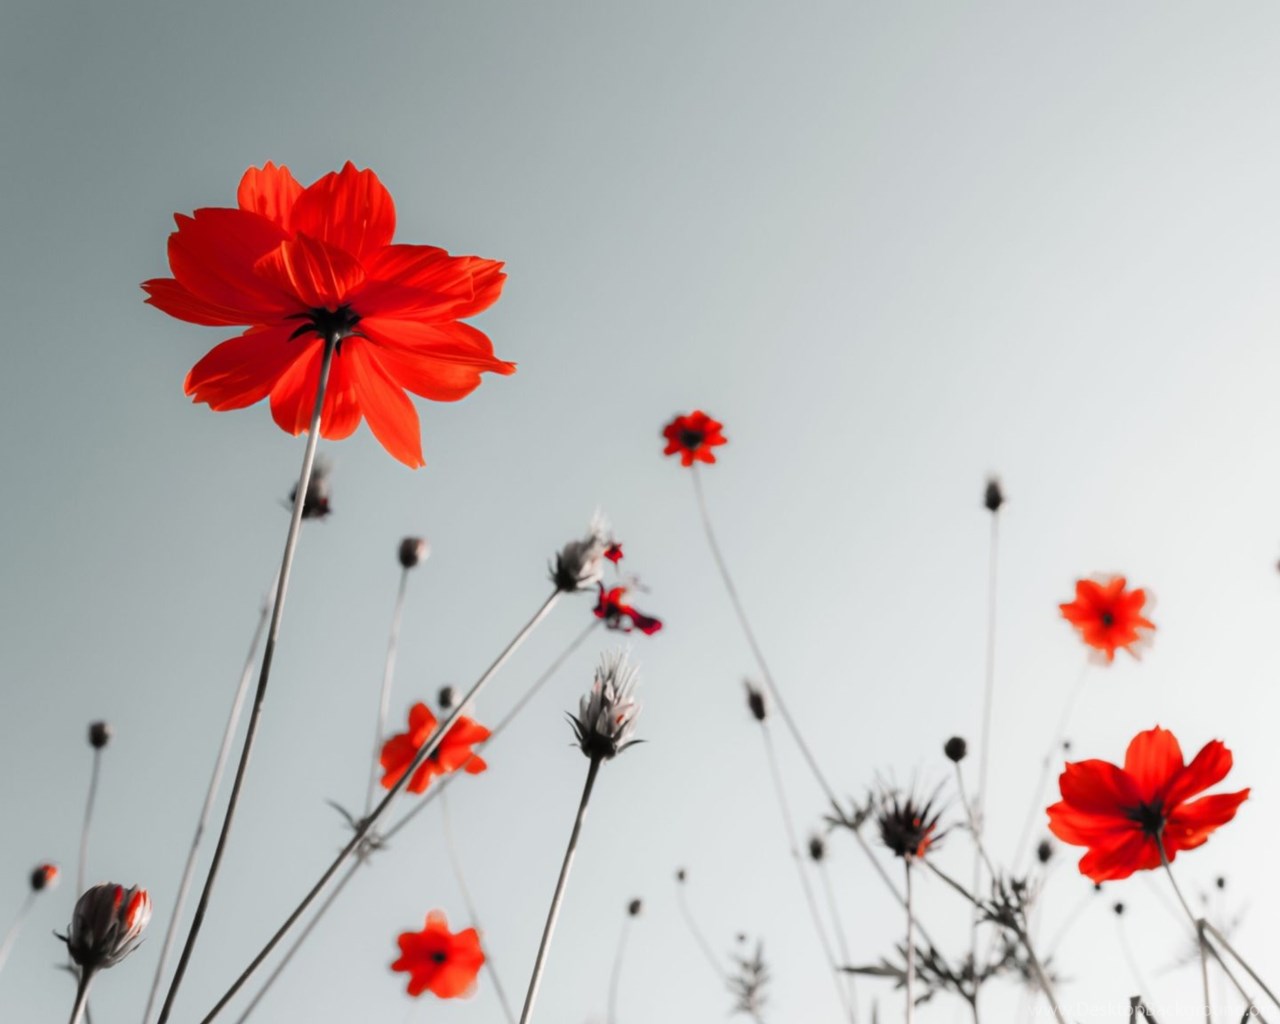 Red Flowers Under Grey Sky Wallpaper For Lenovo S820 Desktop Background